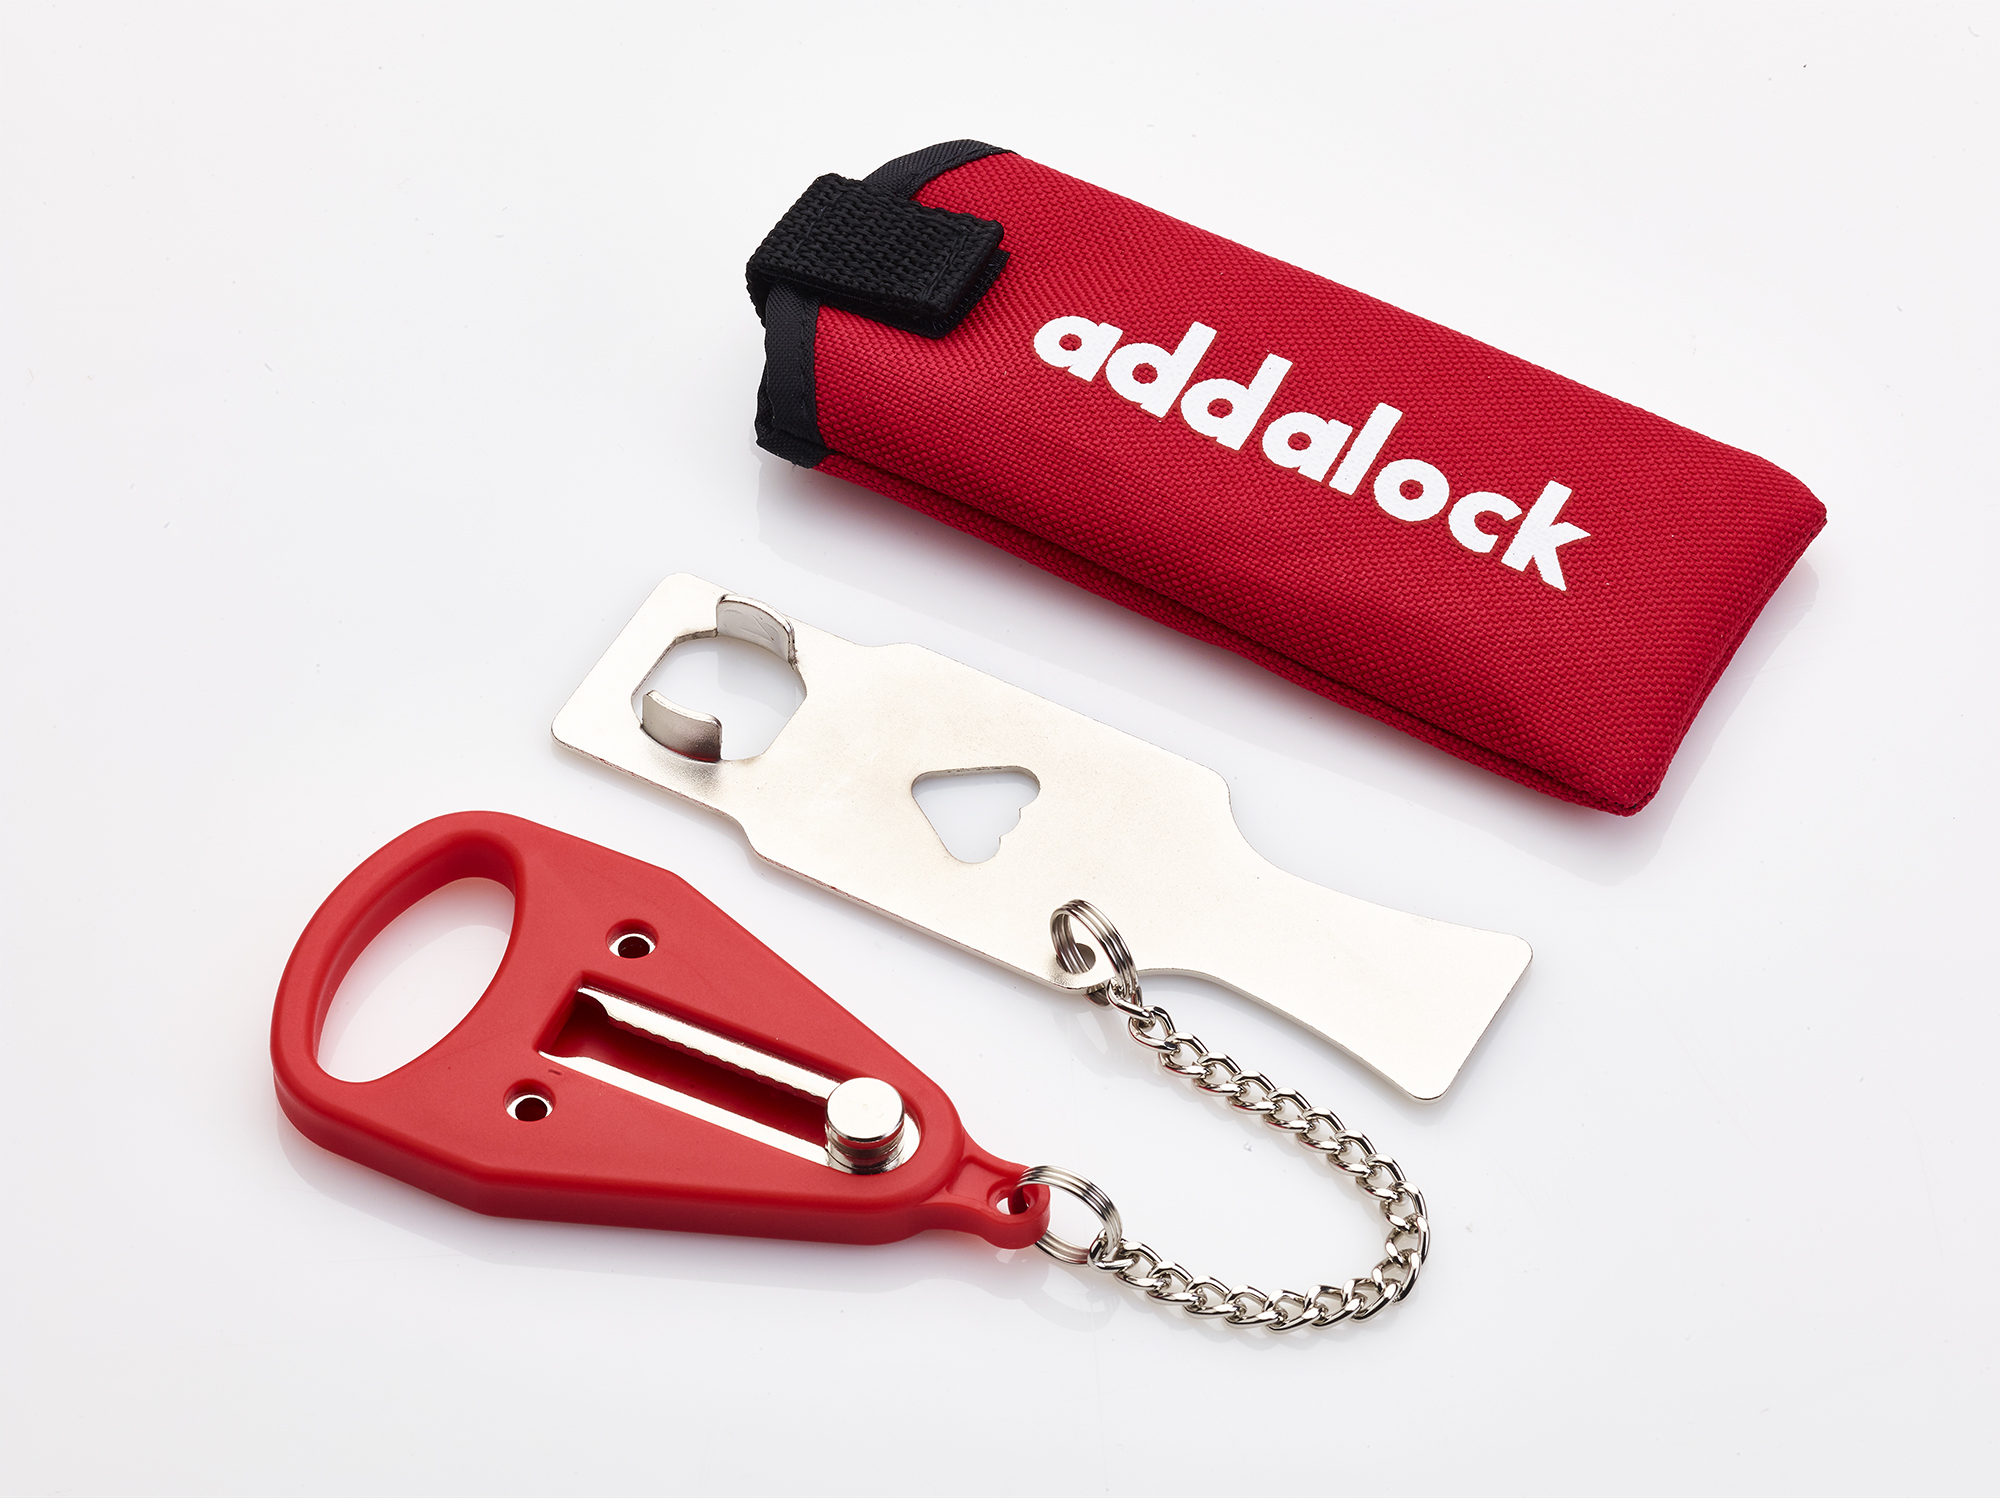 Details about   1/2PCS Portable Door Lock Hardware Security Travel Hotel Lockdown Lock Addalock 